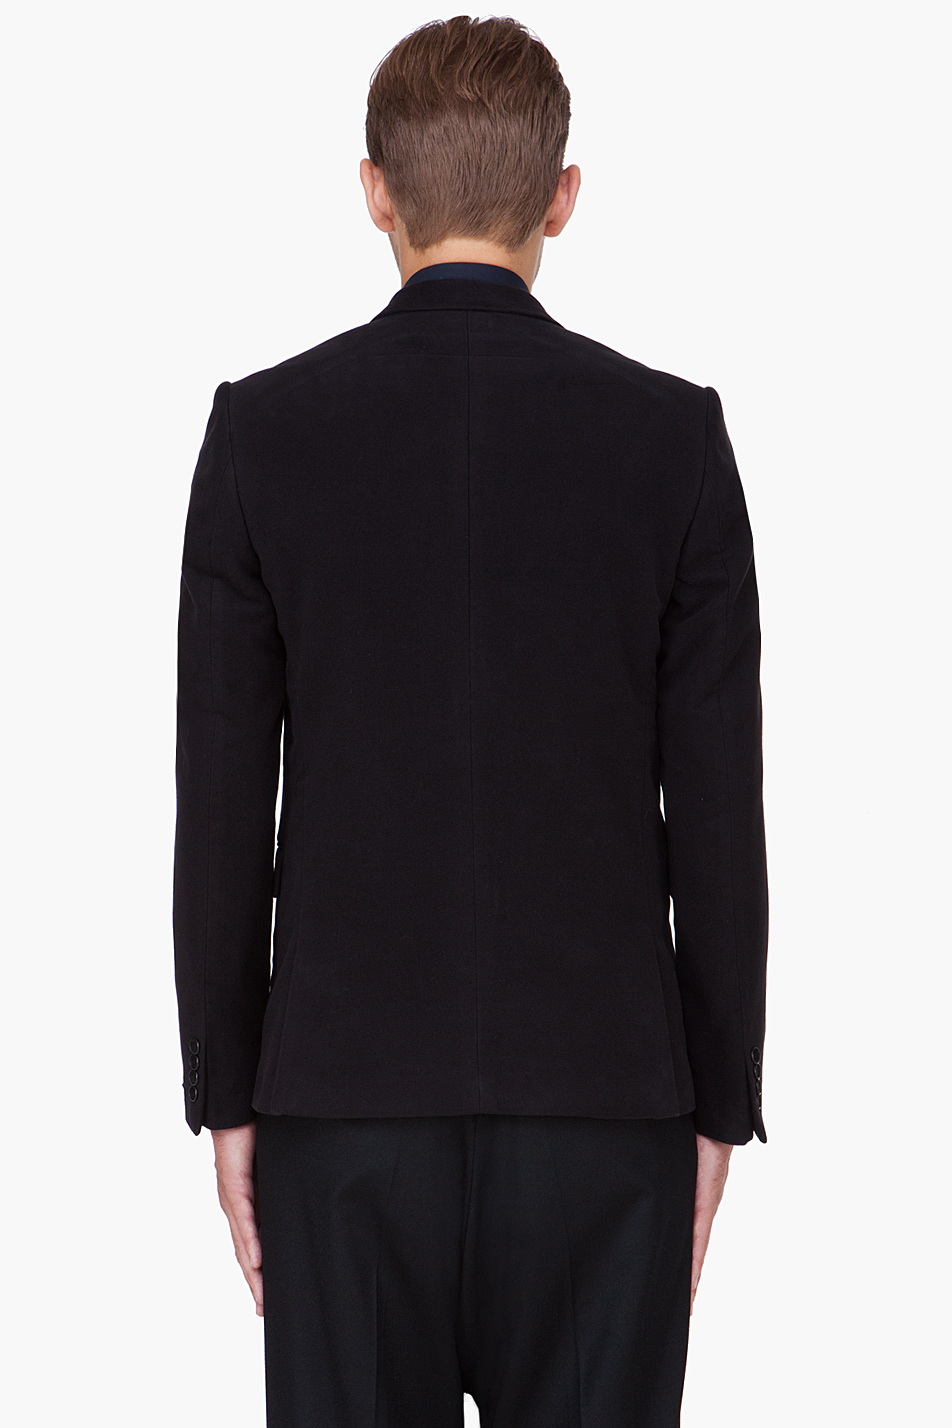 Givenchy Black Moleskin Blazer for Men - Lyst